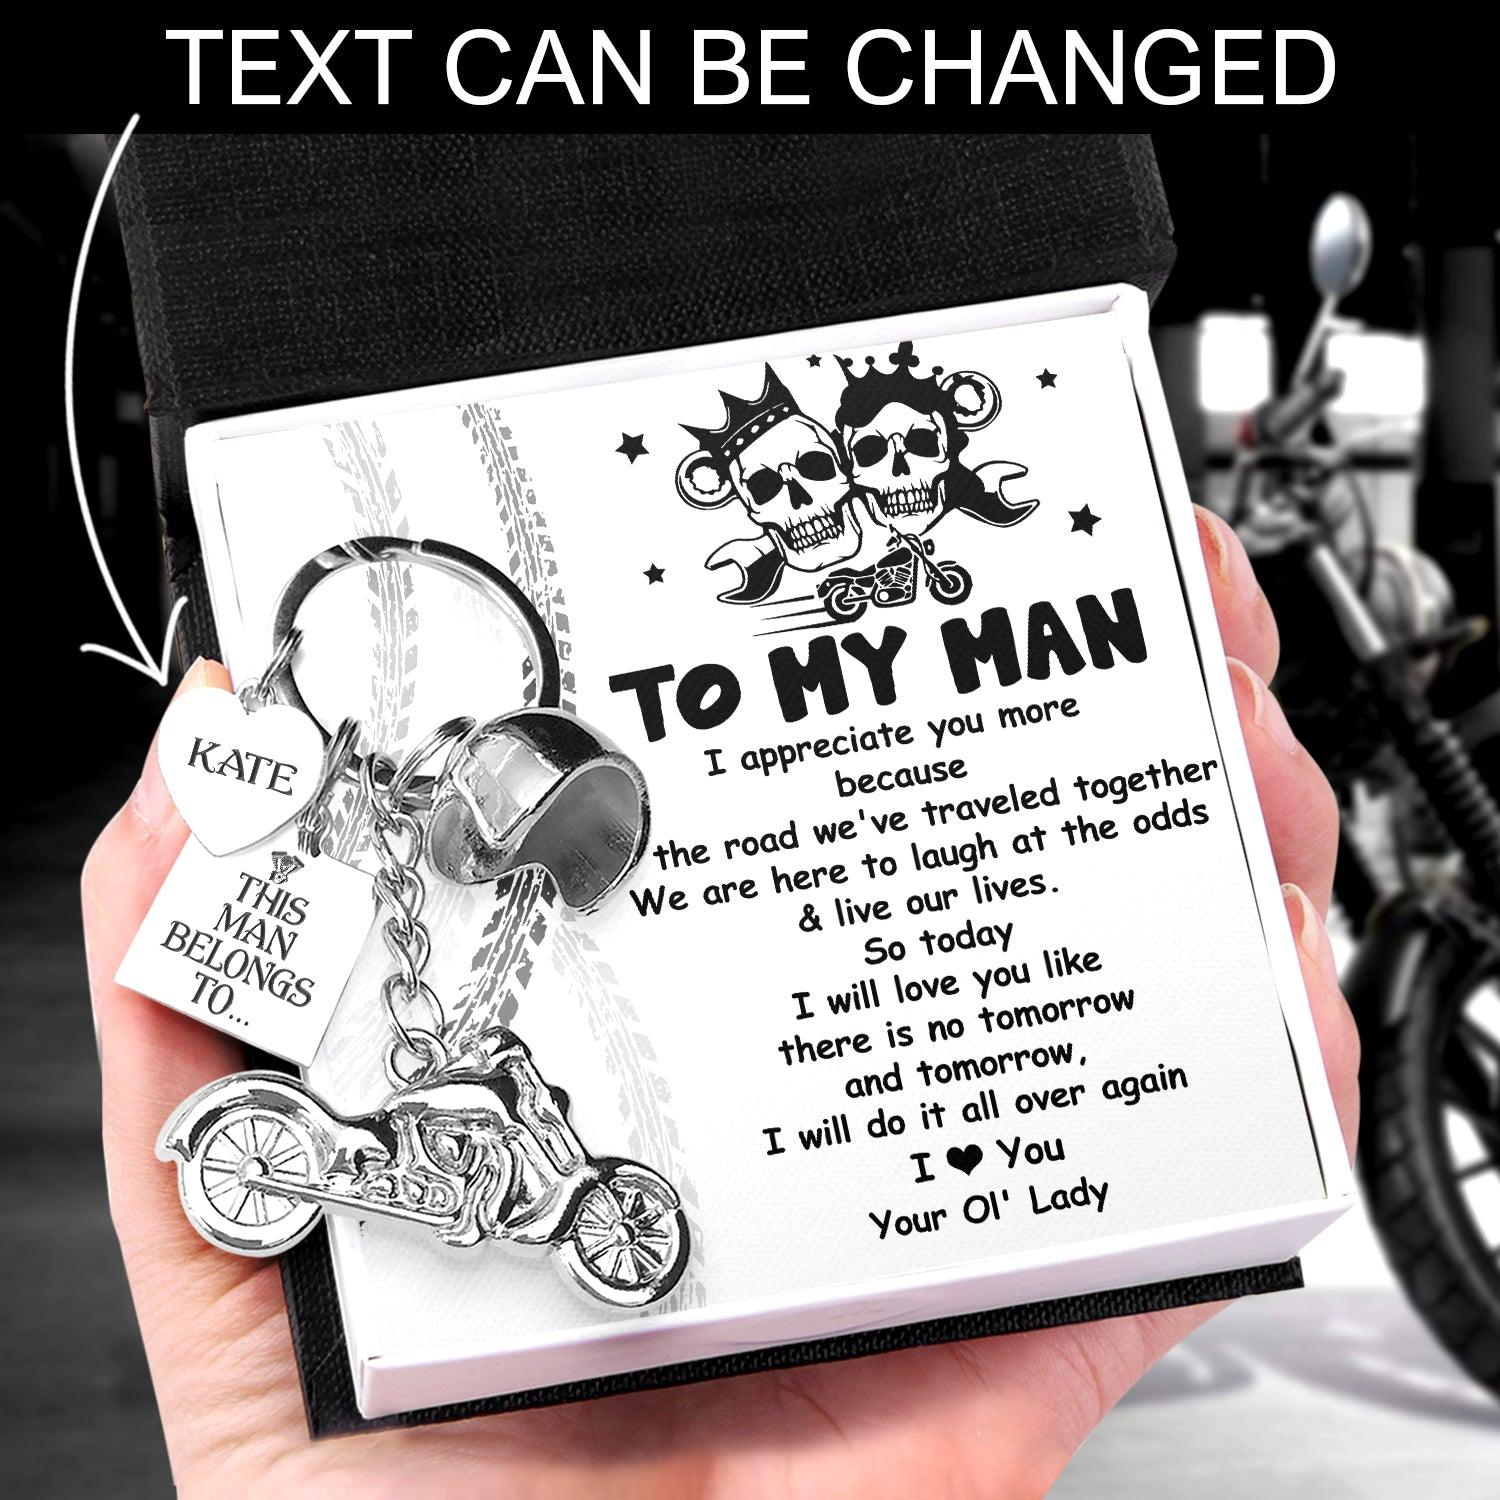 Personalized Classic Bike Keychain - Biker - To My Man - I Love You - Augkt26014 - Gifts Holder